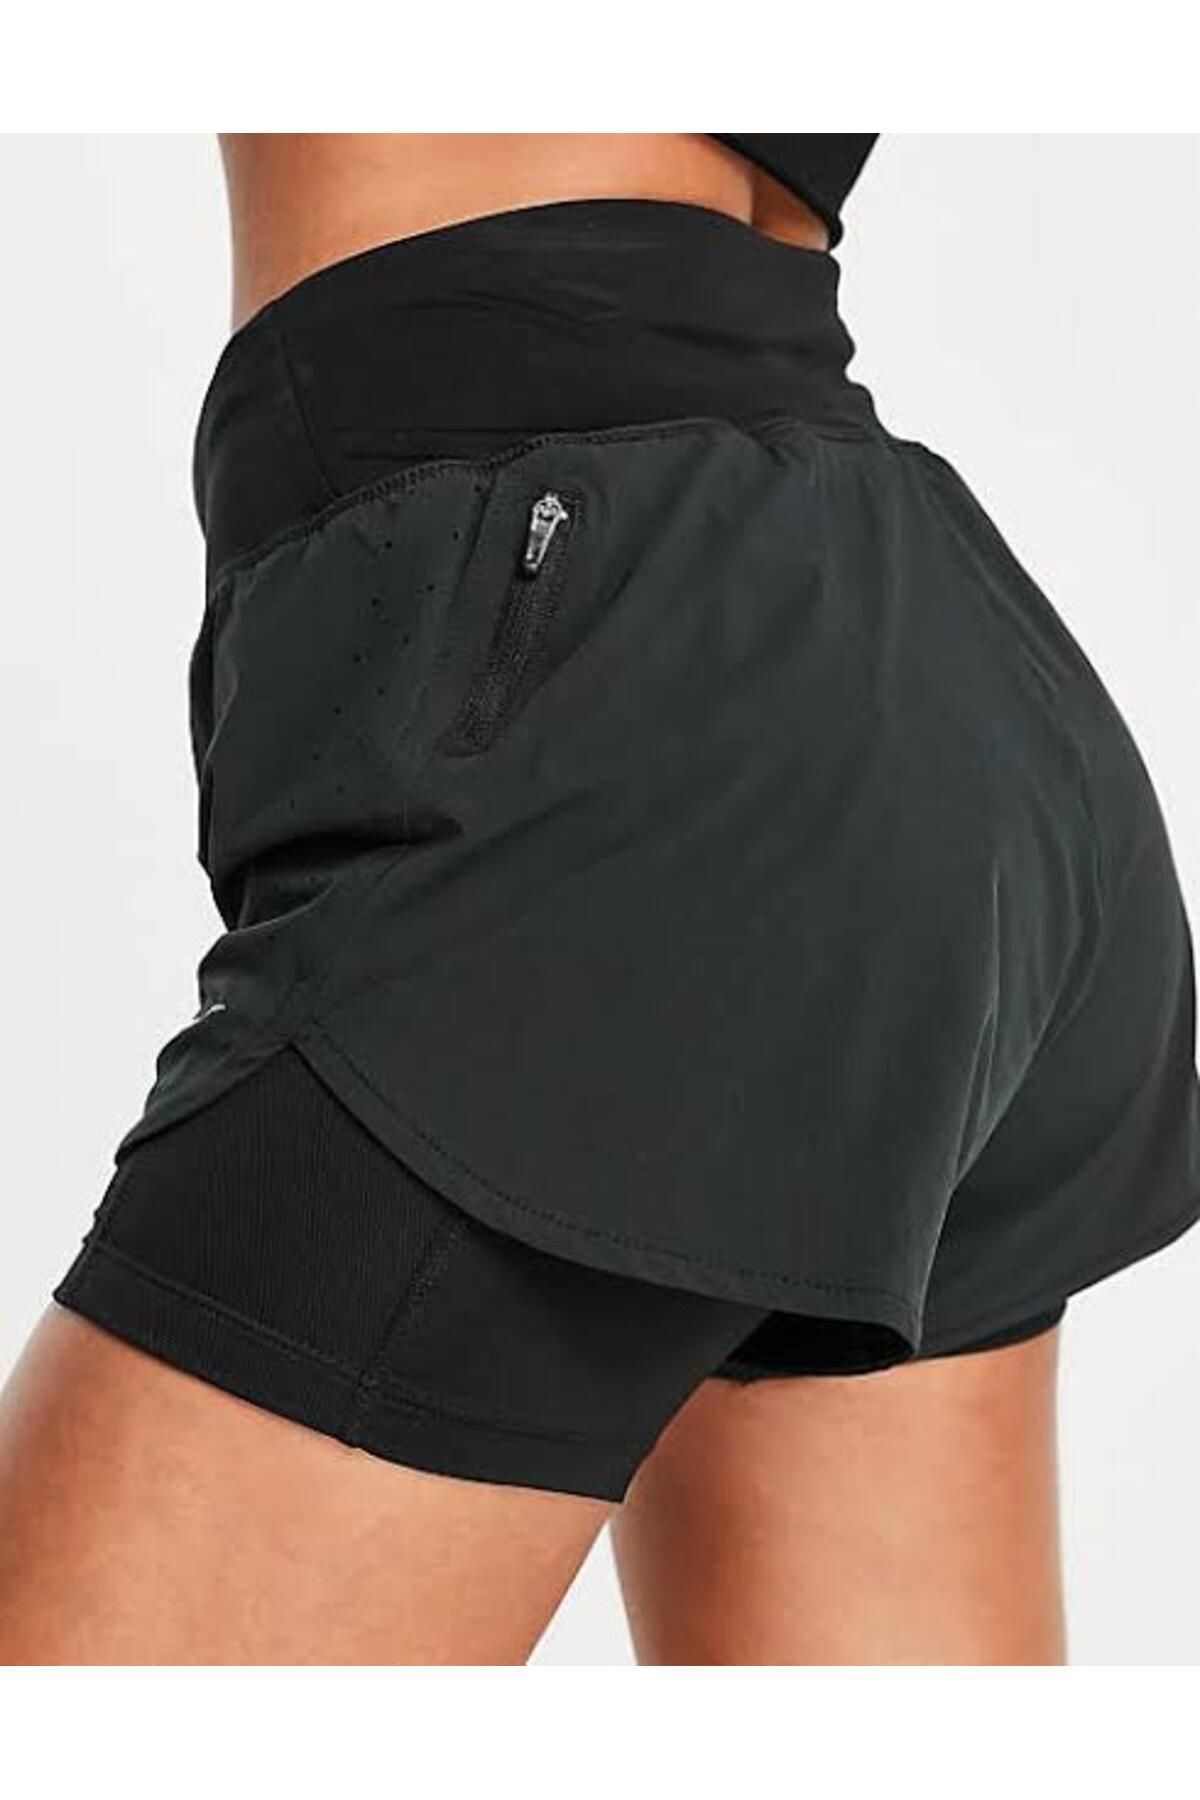 Nike Sports Shorts - Black - Normal Waist - Trendyol